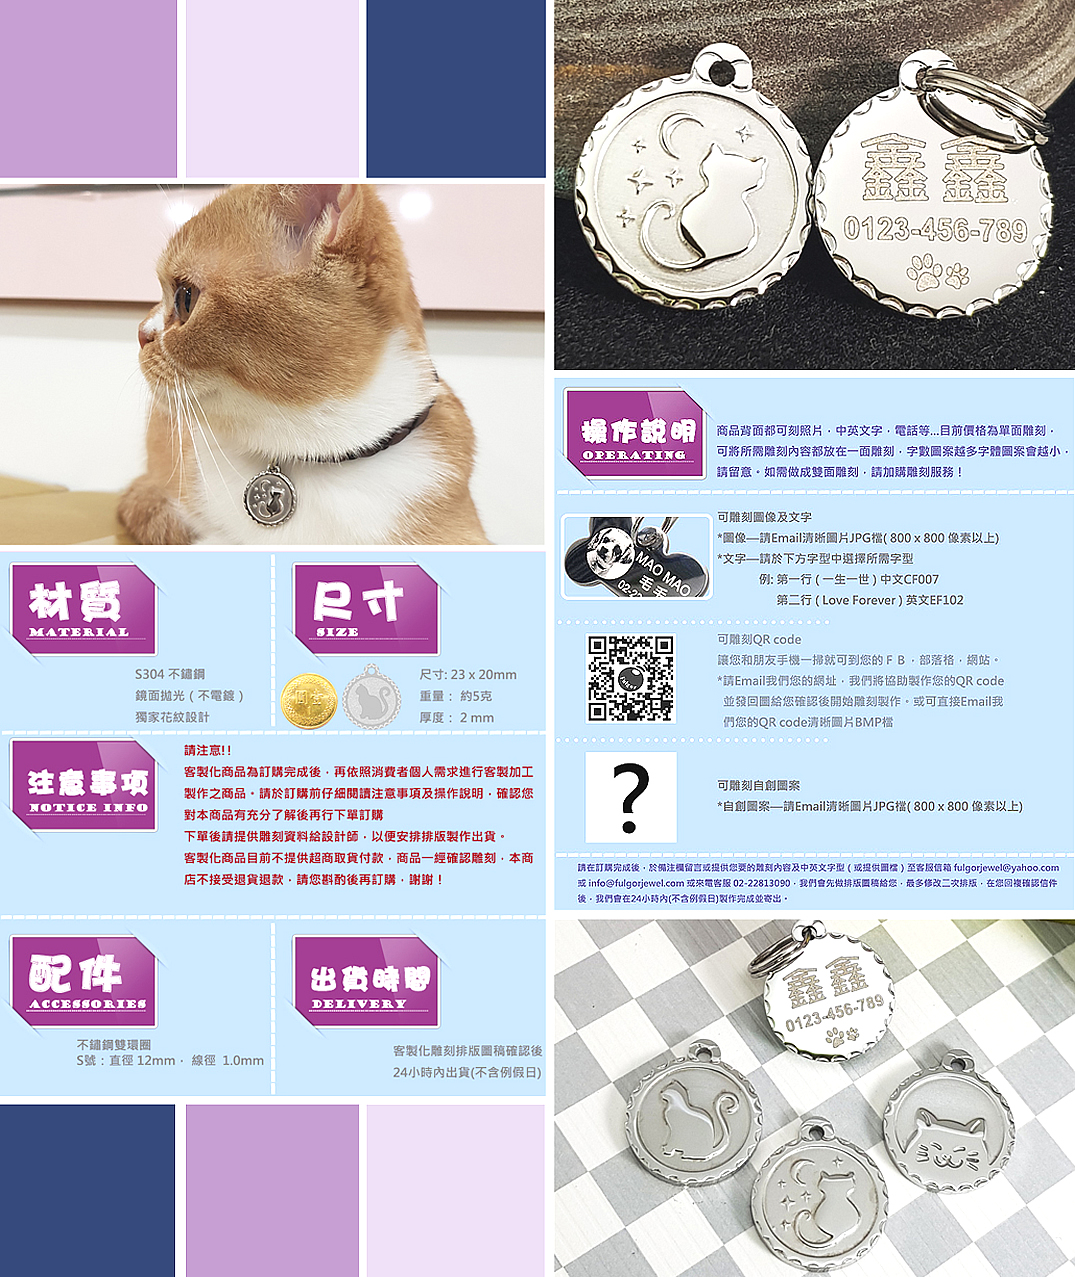 客製貓咪姓名牌吊牌月亮貓貓牌-富狗客製-Steel-Engraving-Moon-Cat-Design-Design-pet id tag-FulgorJewel-Cat-Tag-info.jpg